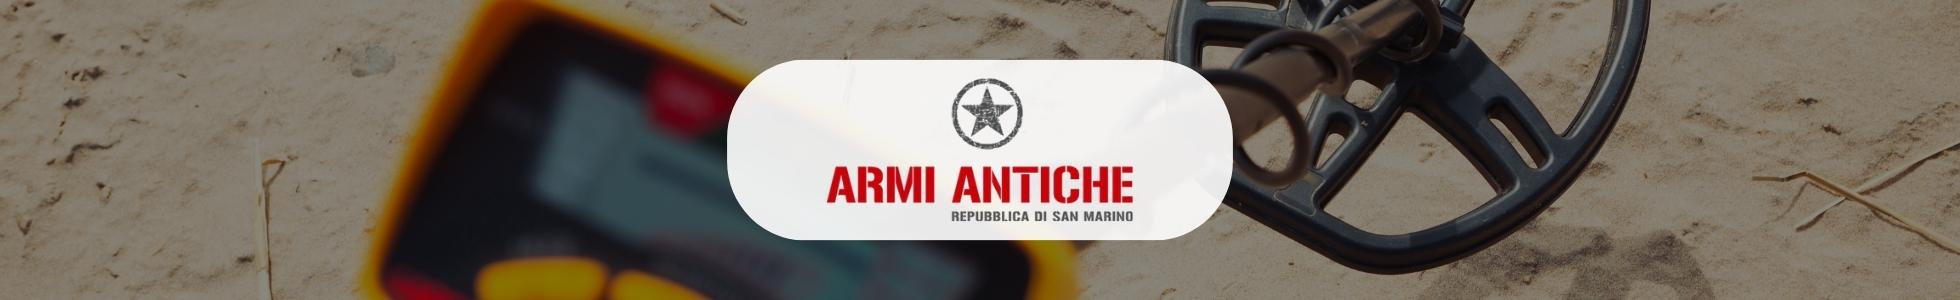 Armi Antiche San Marino - shop online metal detector